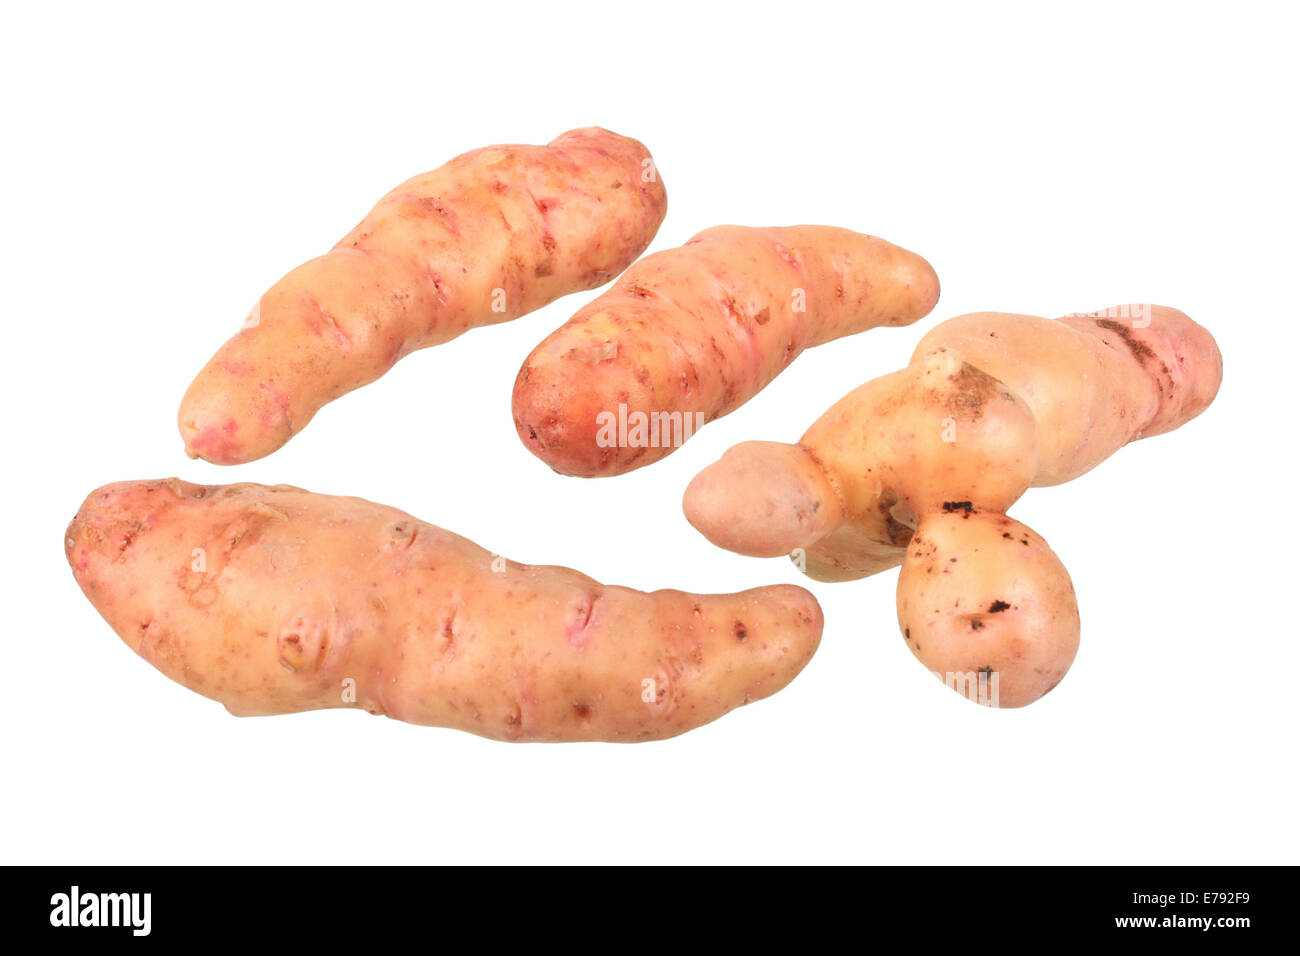 Potatoes, Pink Fire Apple variety Stock Photo